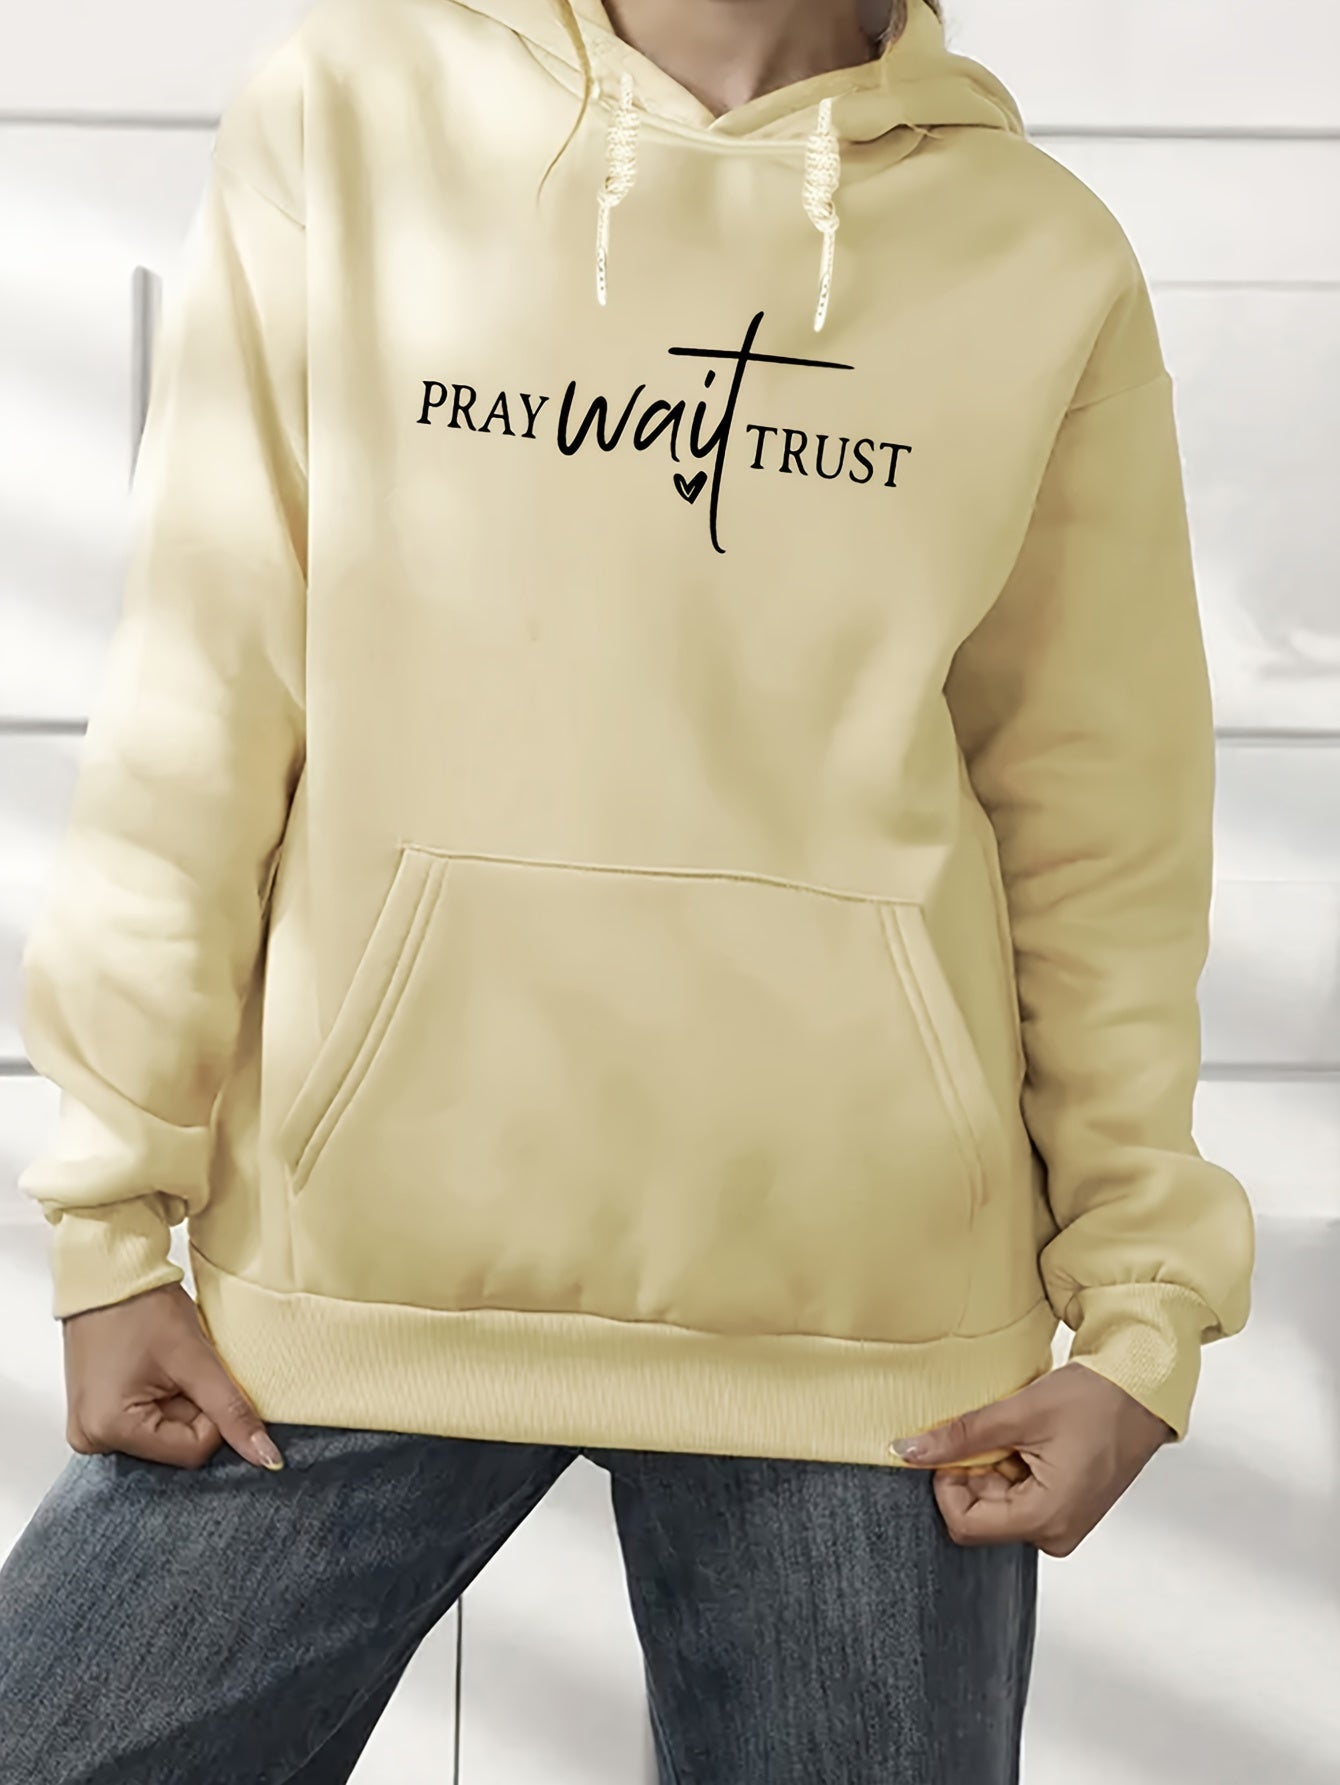 Pray Wait Trust Women's Christian Pullover Hooded Sweatshirt claimedbygoddesigns